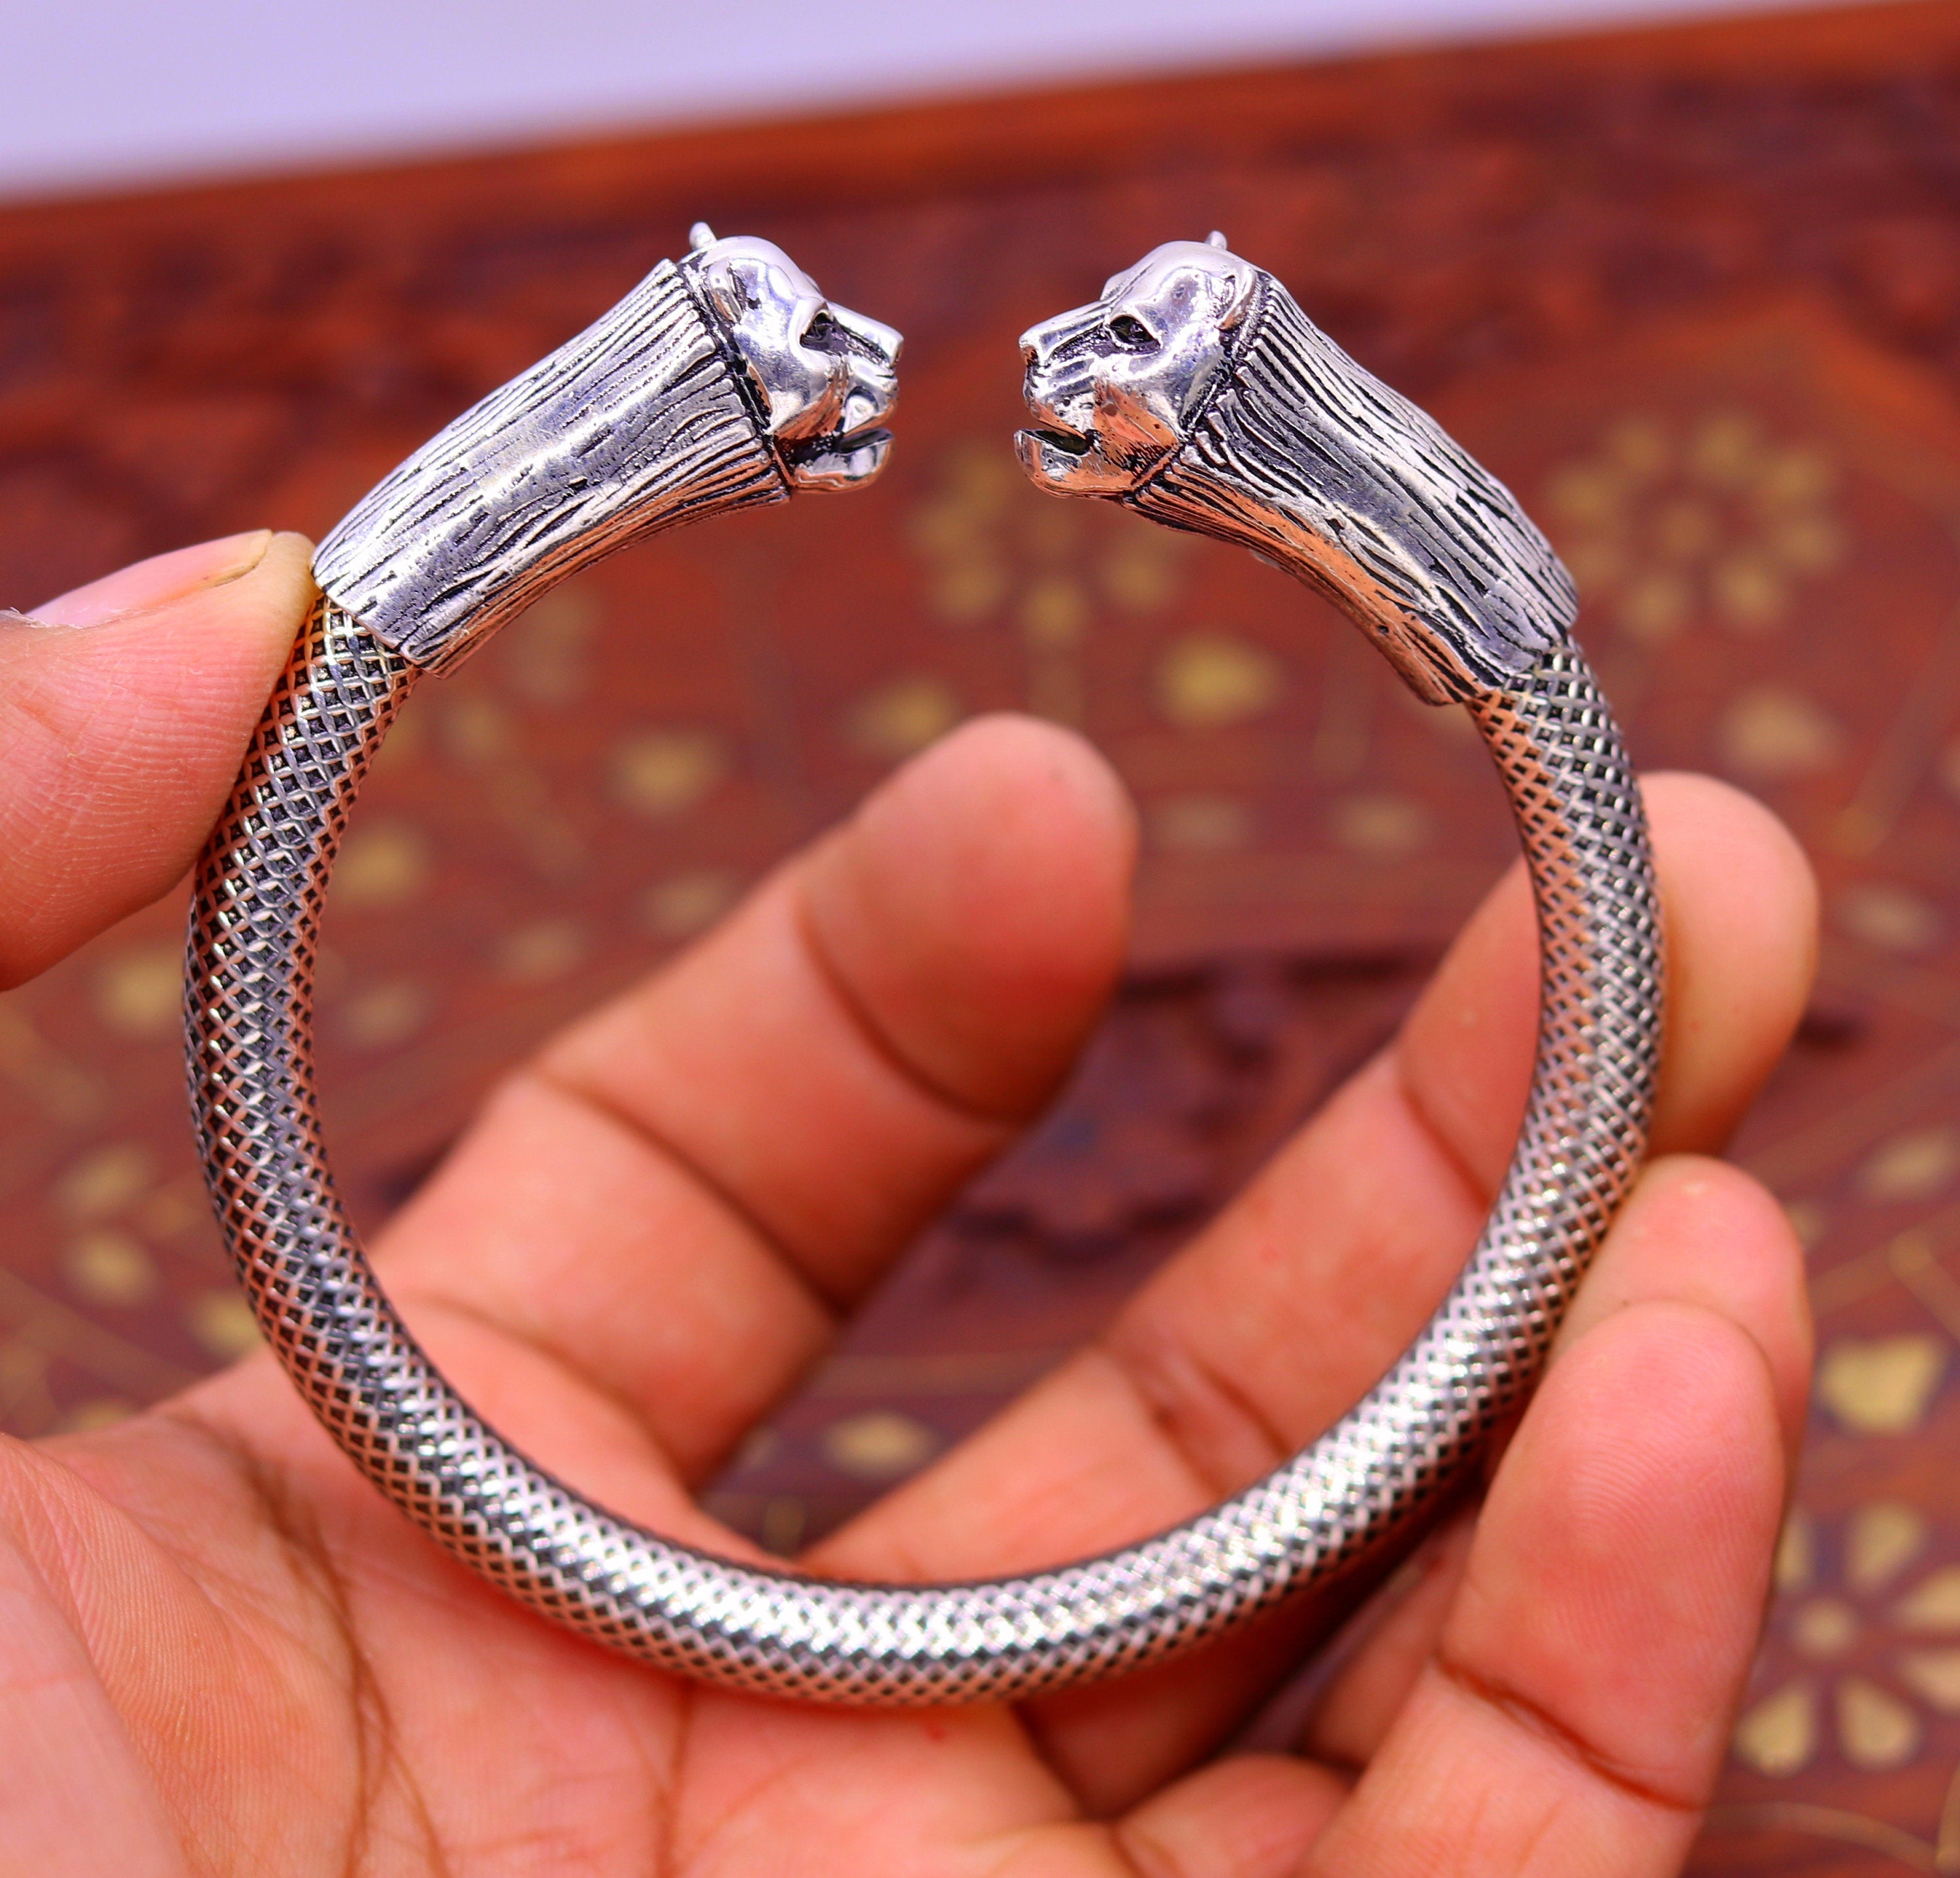 Chicque Boho Silver Hand Chain Layered Rhinestone Finger Ring Bracelet Bead  Hand Jewelry Wedding Finger Chain Bracelet for Women and Girls : Amazon.in:  Jewellery